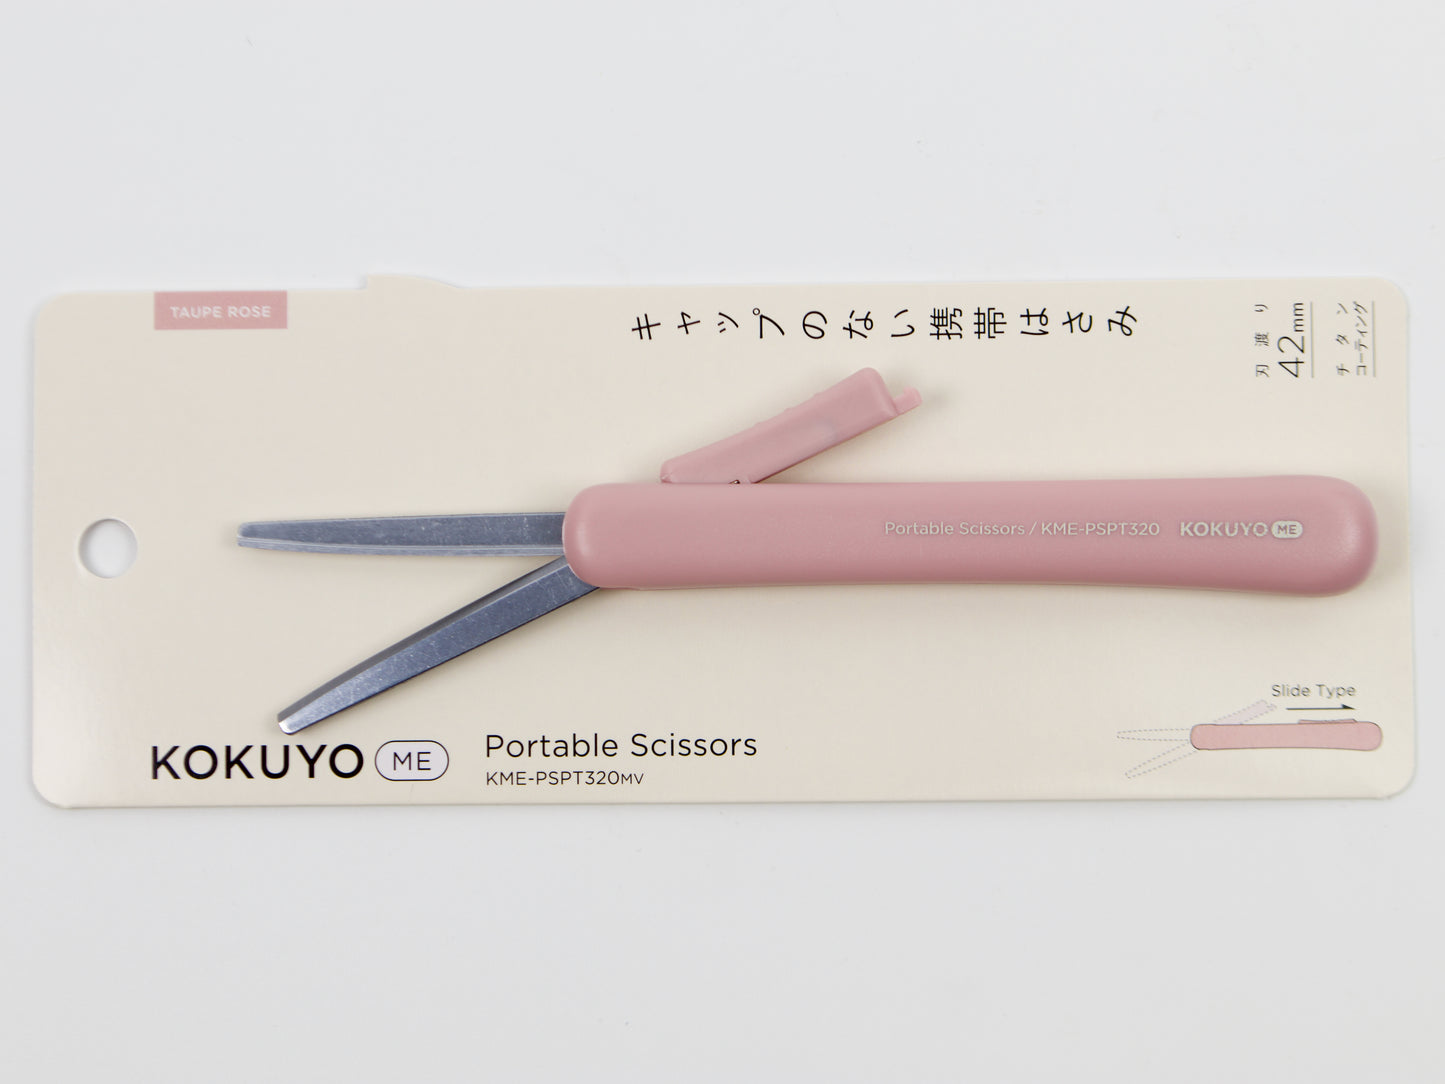 Kokuyo Me Series Portable Scissors - Series 2